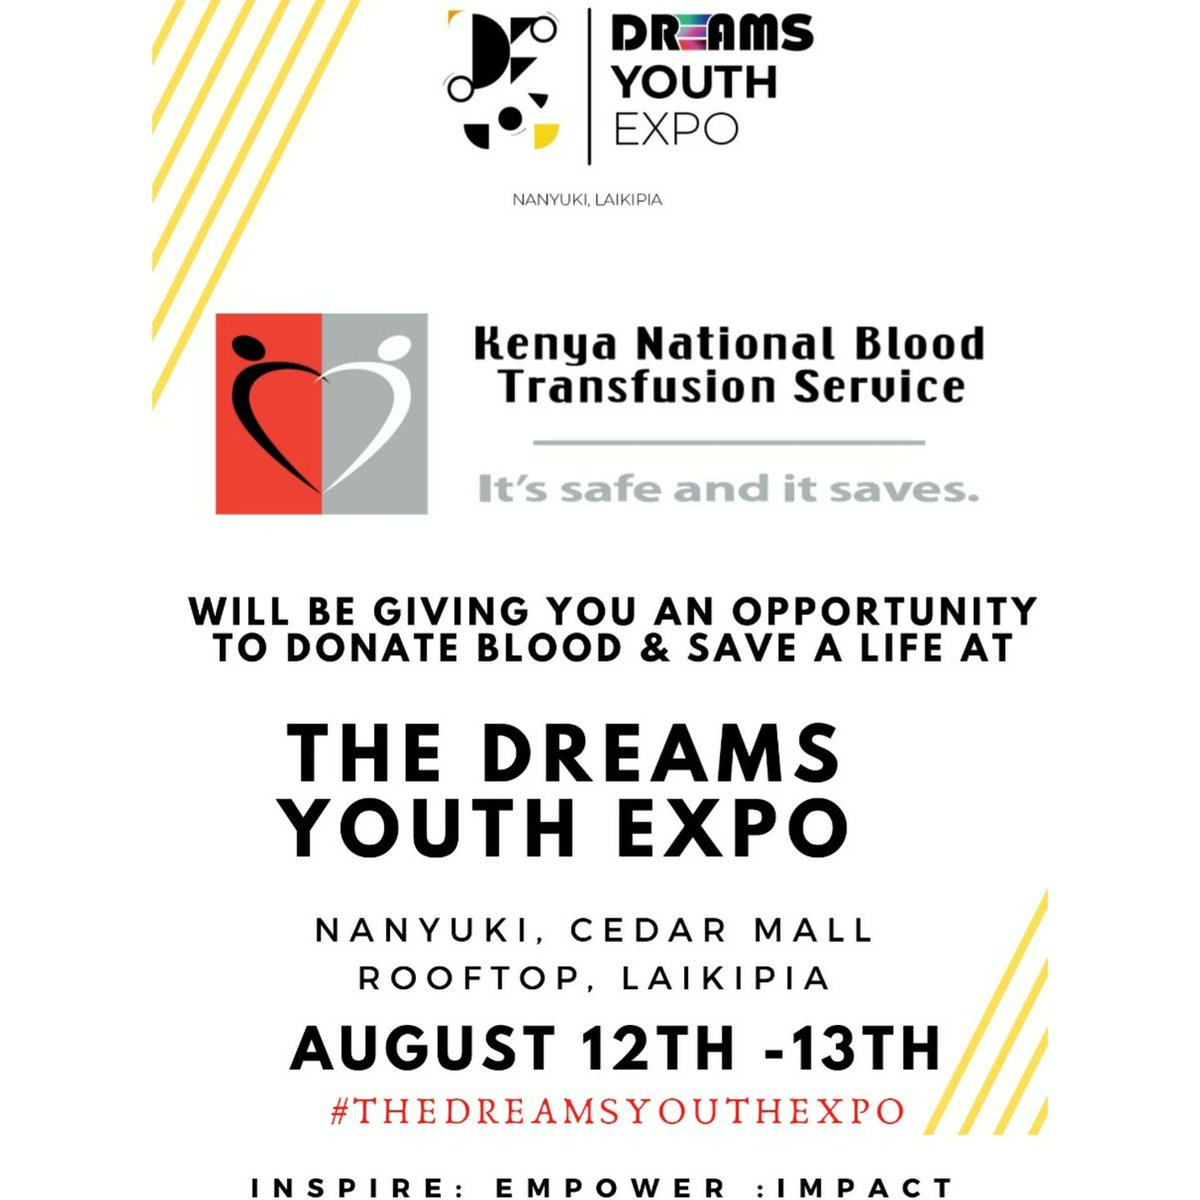 #TheDreamsYouthExpo will hub side events. Fun & engaging. Let's meet at The Cedar Mall Nanyuki rooftop on 12th & 13th of August. #internationalyouthday2021 #IYD2021 #Youthweek #economyyavijana #srhr #blooddonation #sanitaryproducts #futureofwork #Laikipia